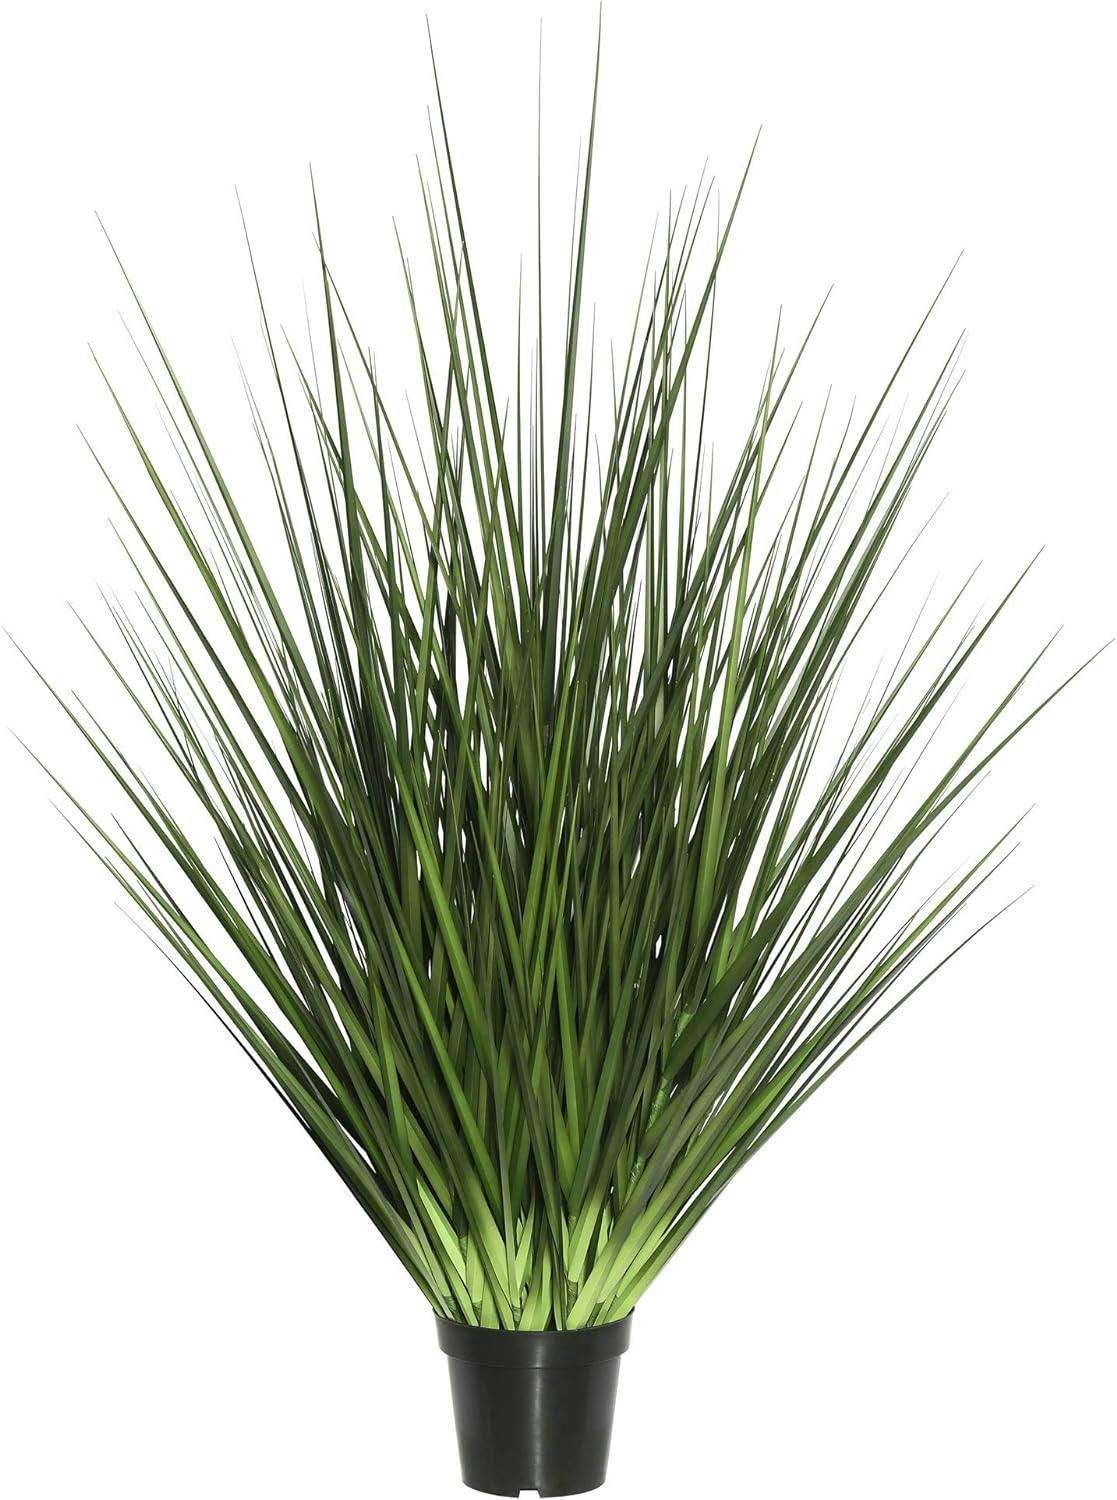 Evergreen Bliss 36" Lush Artificial Potted Grass in Sleek Black Pot